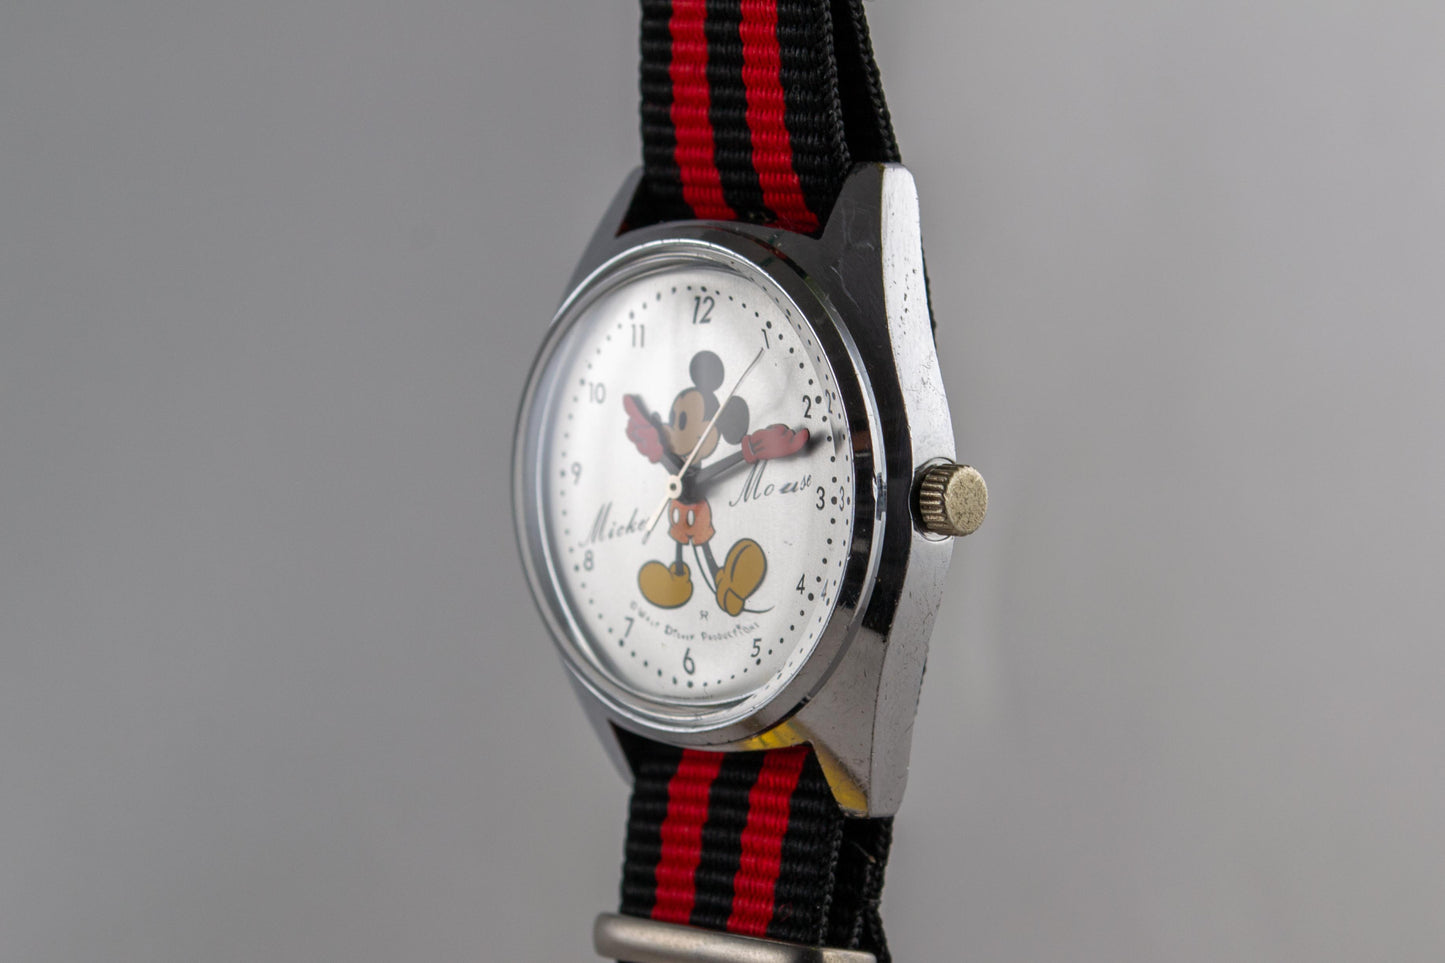 lumeville montre vintage Seiko Mécanique Mickey mouse disney 5000-7000